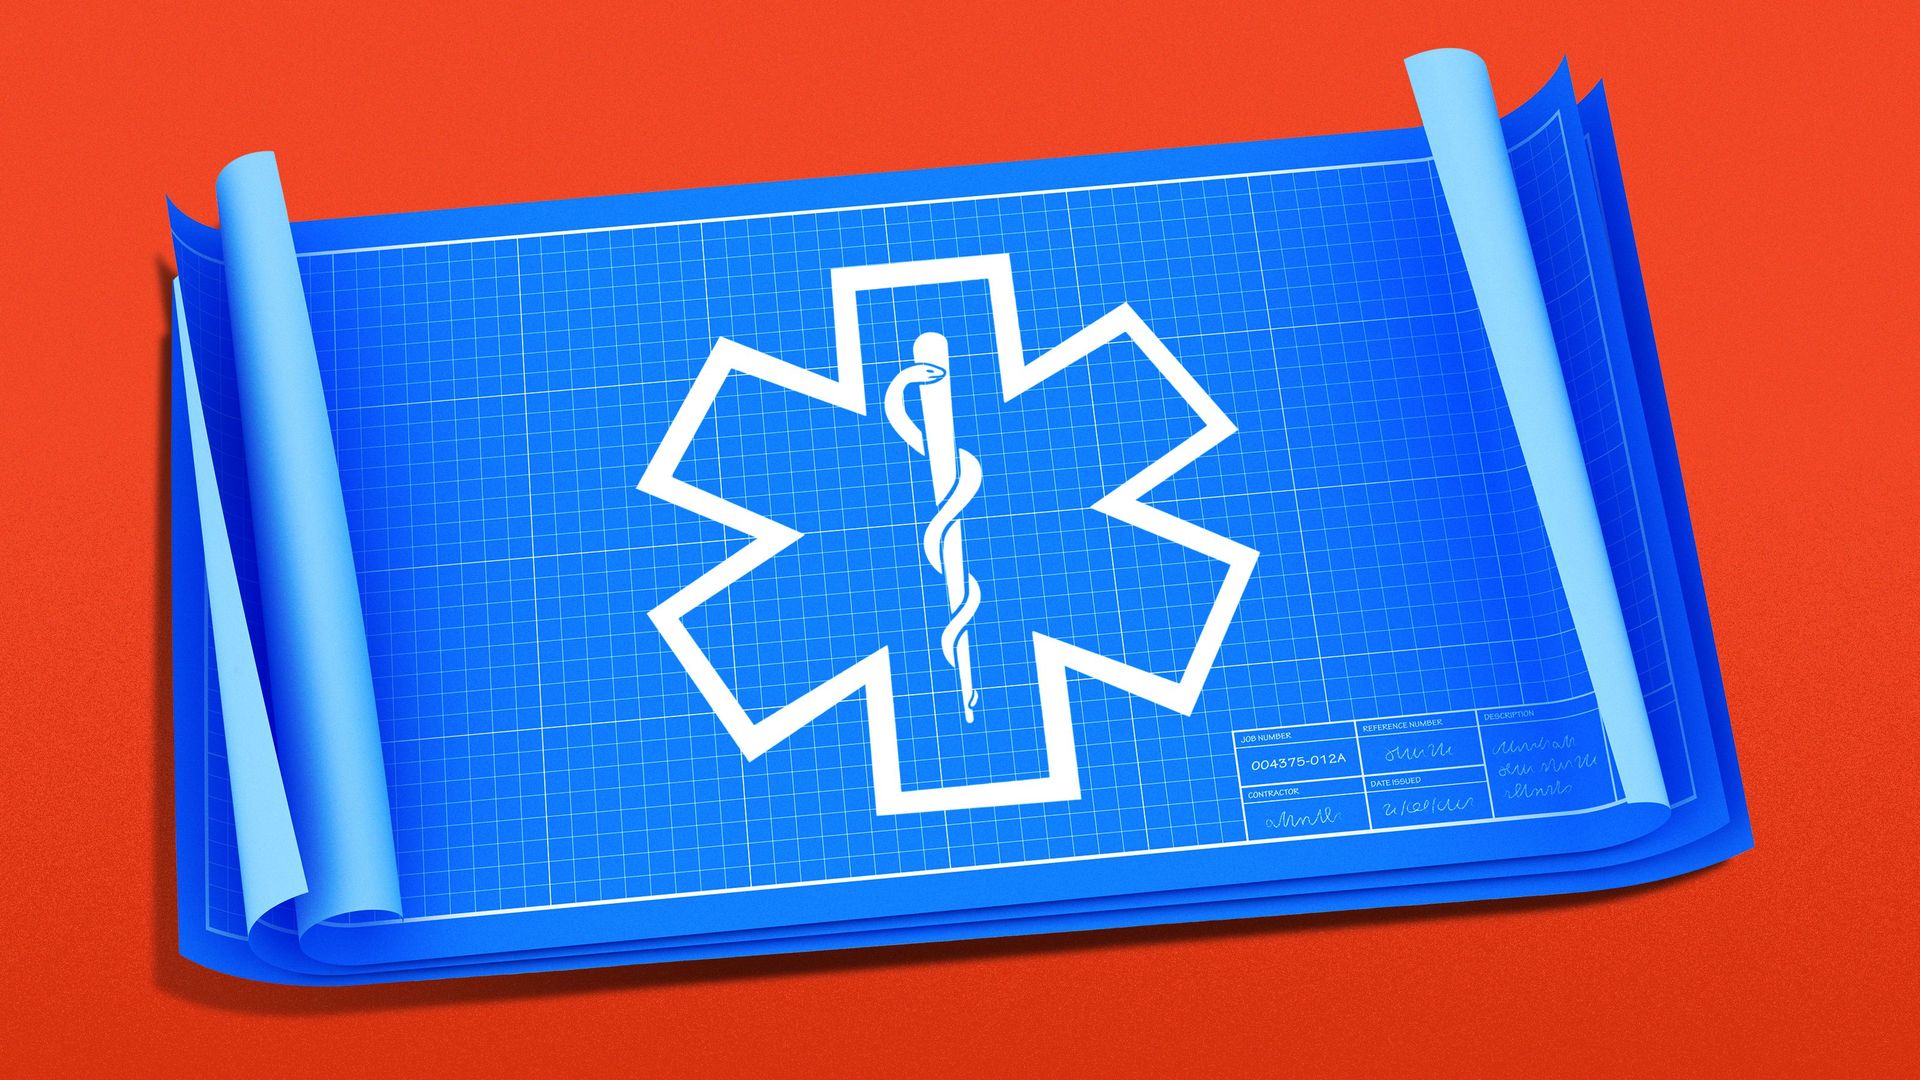 Illustration of blueprints with an ambulance emergency symbol drawn.